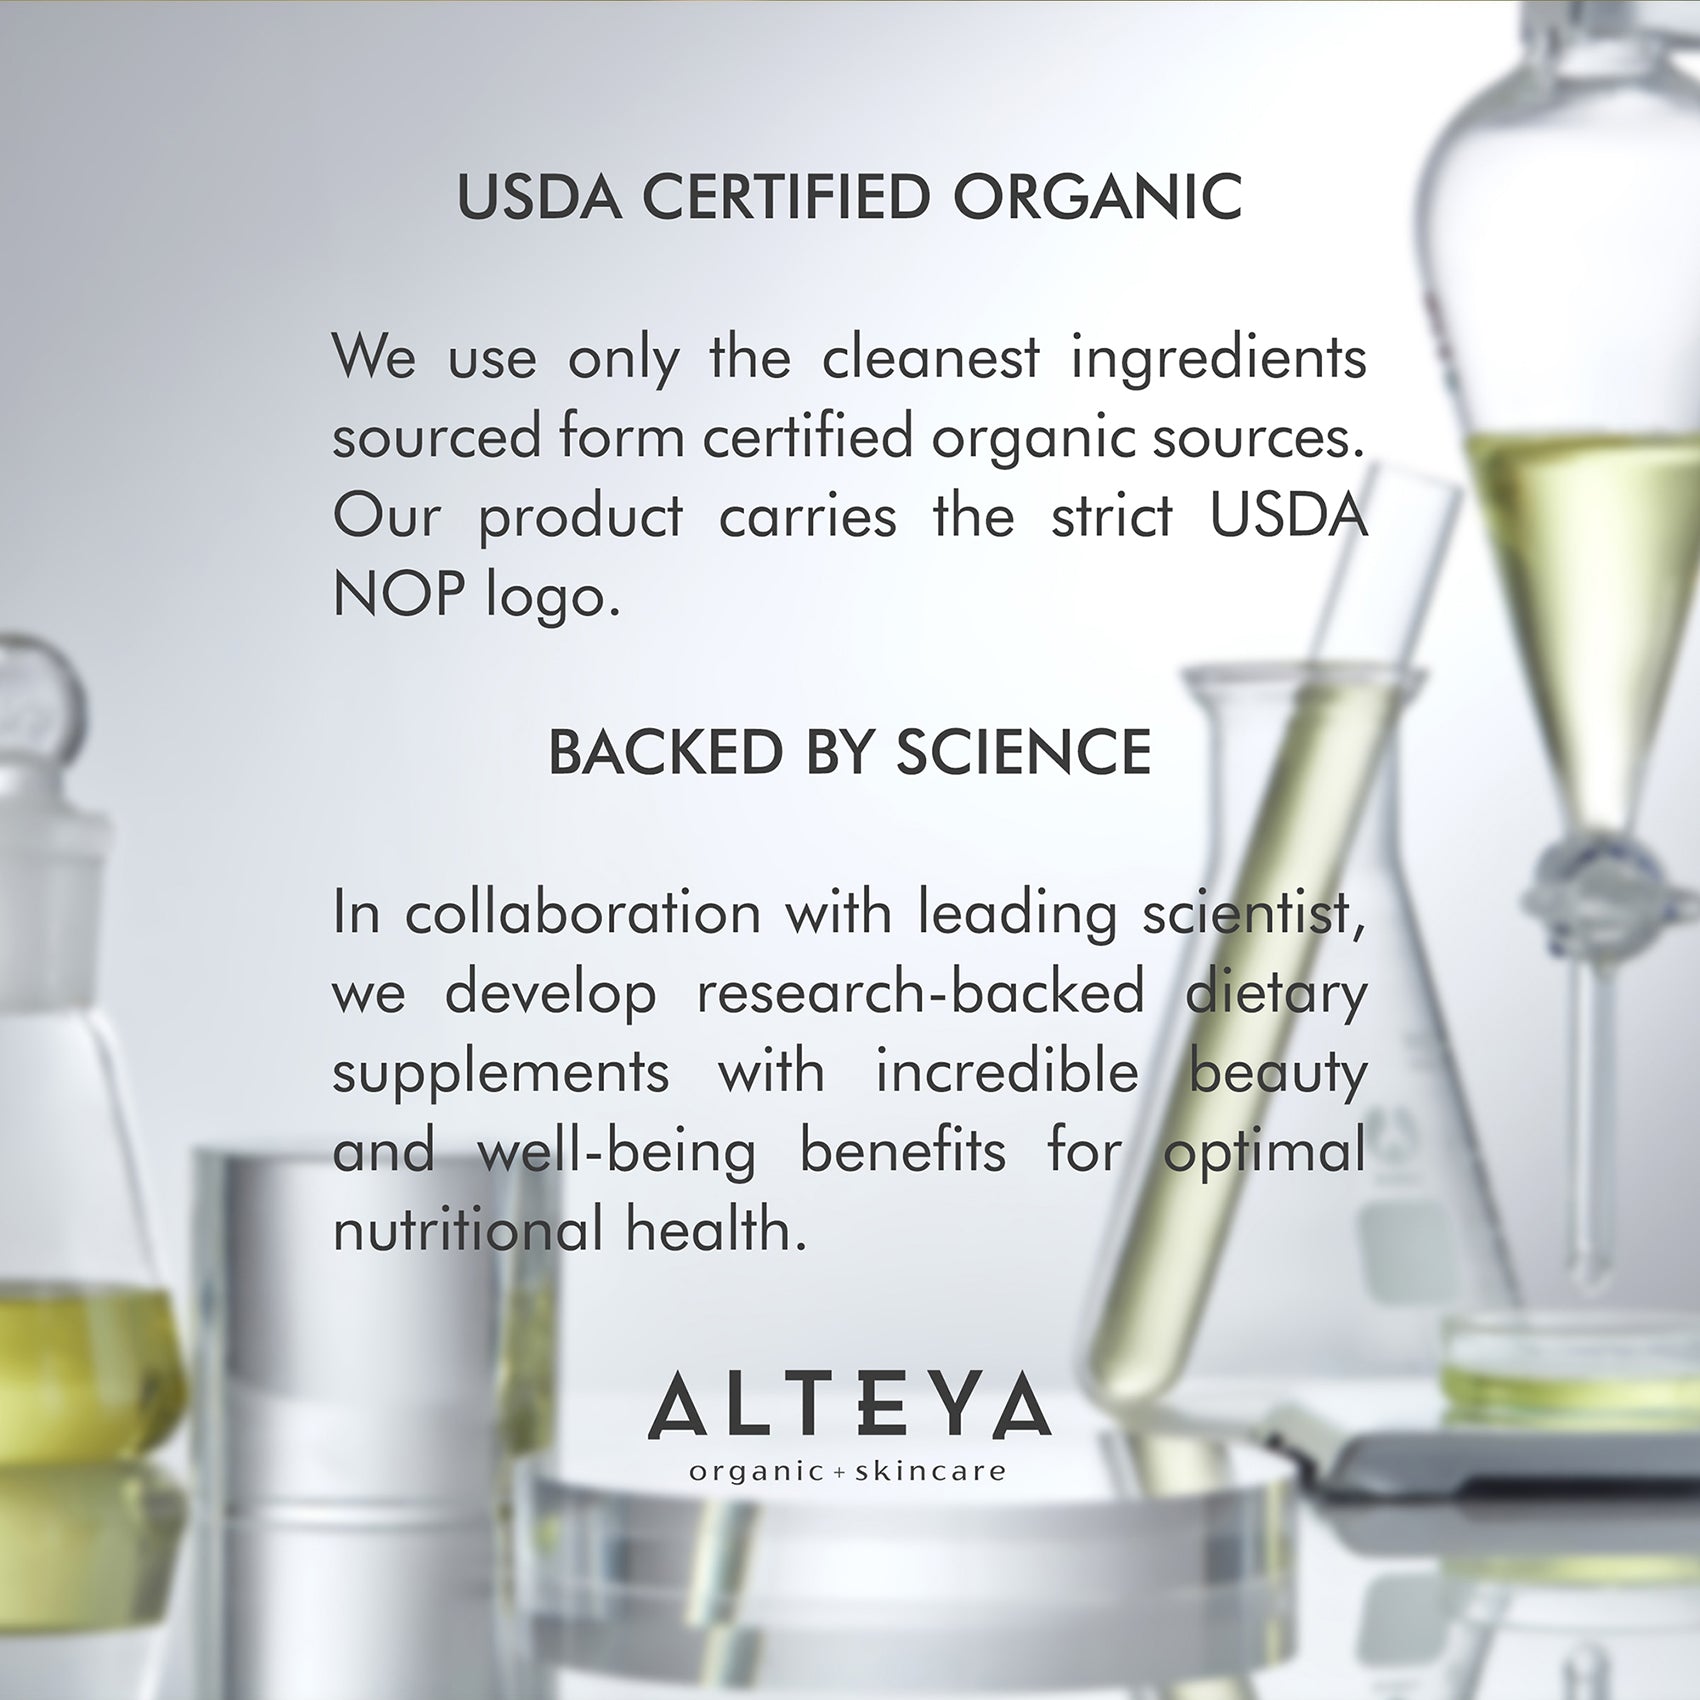 An Alteya Organics Rose Beauty Omegas Skin & Hair Organic Supplement certified in the USA.